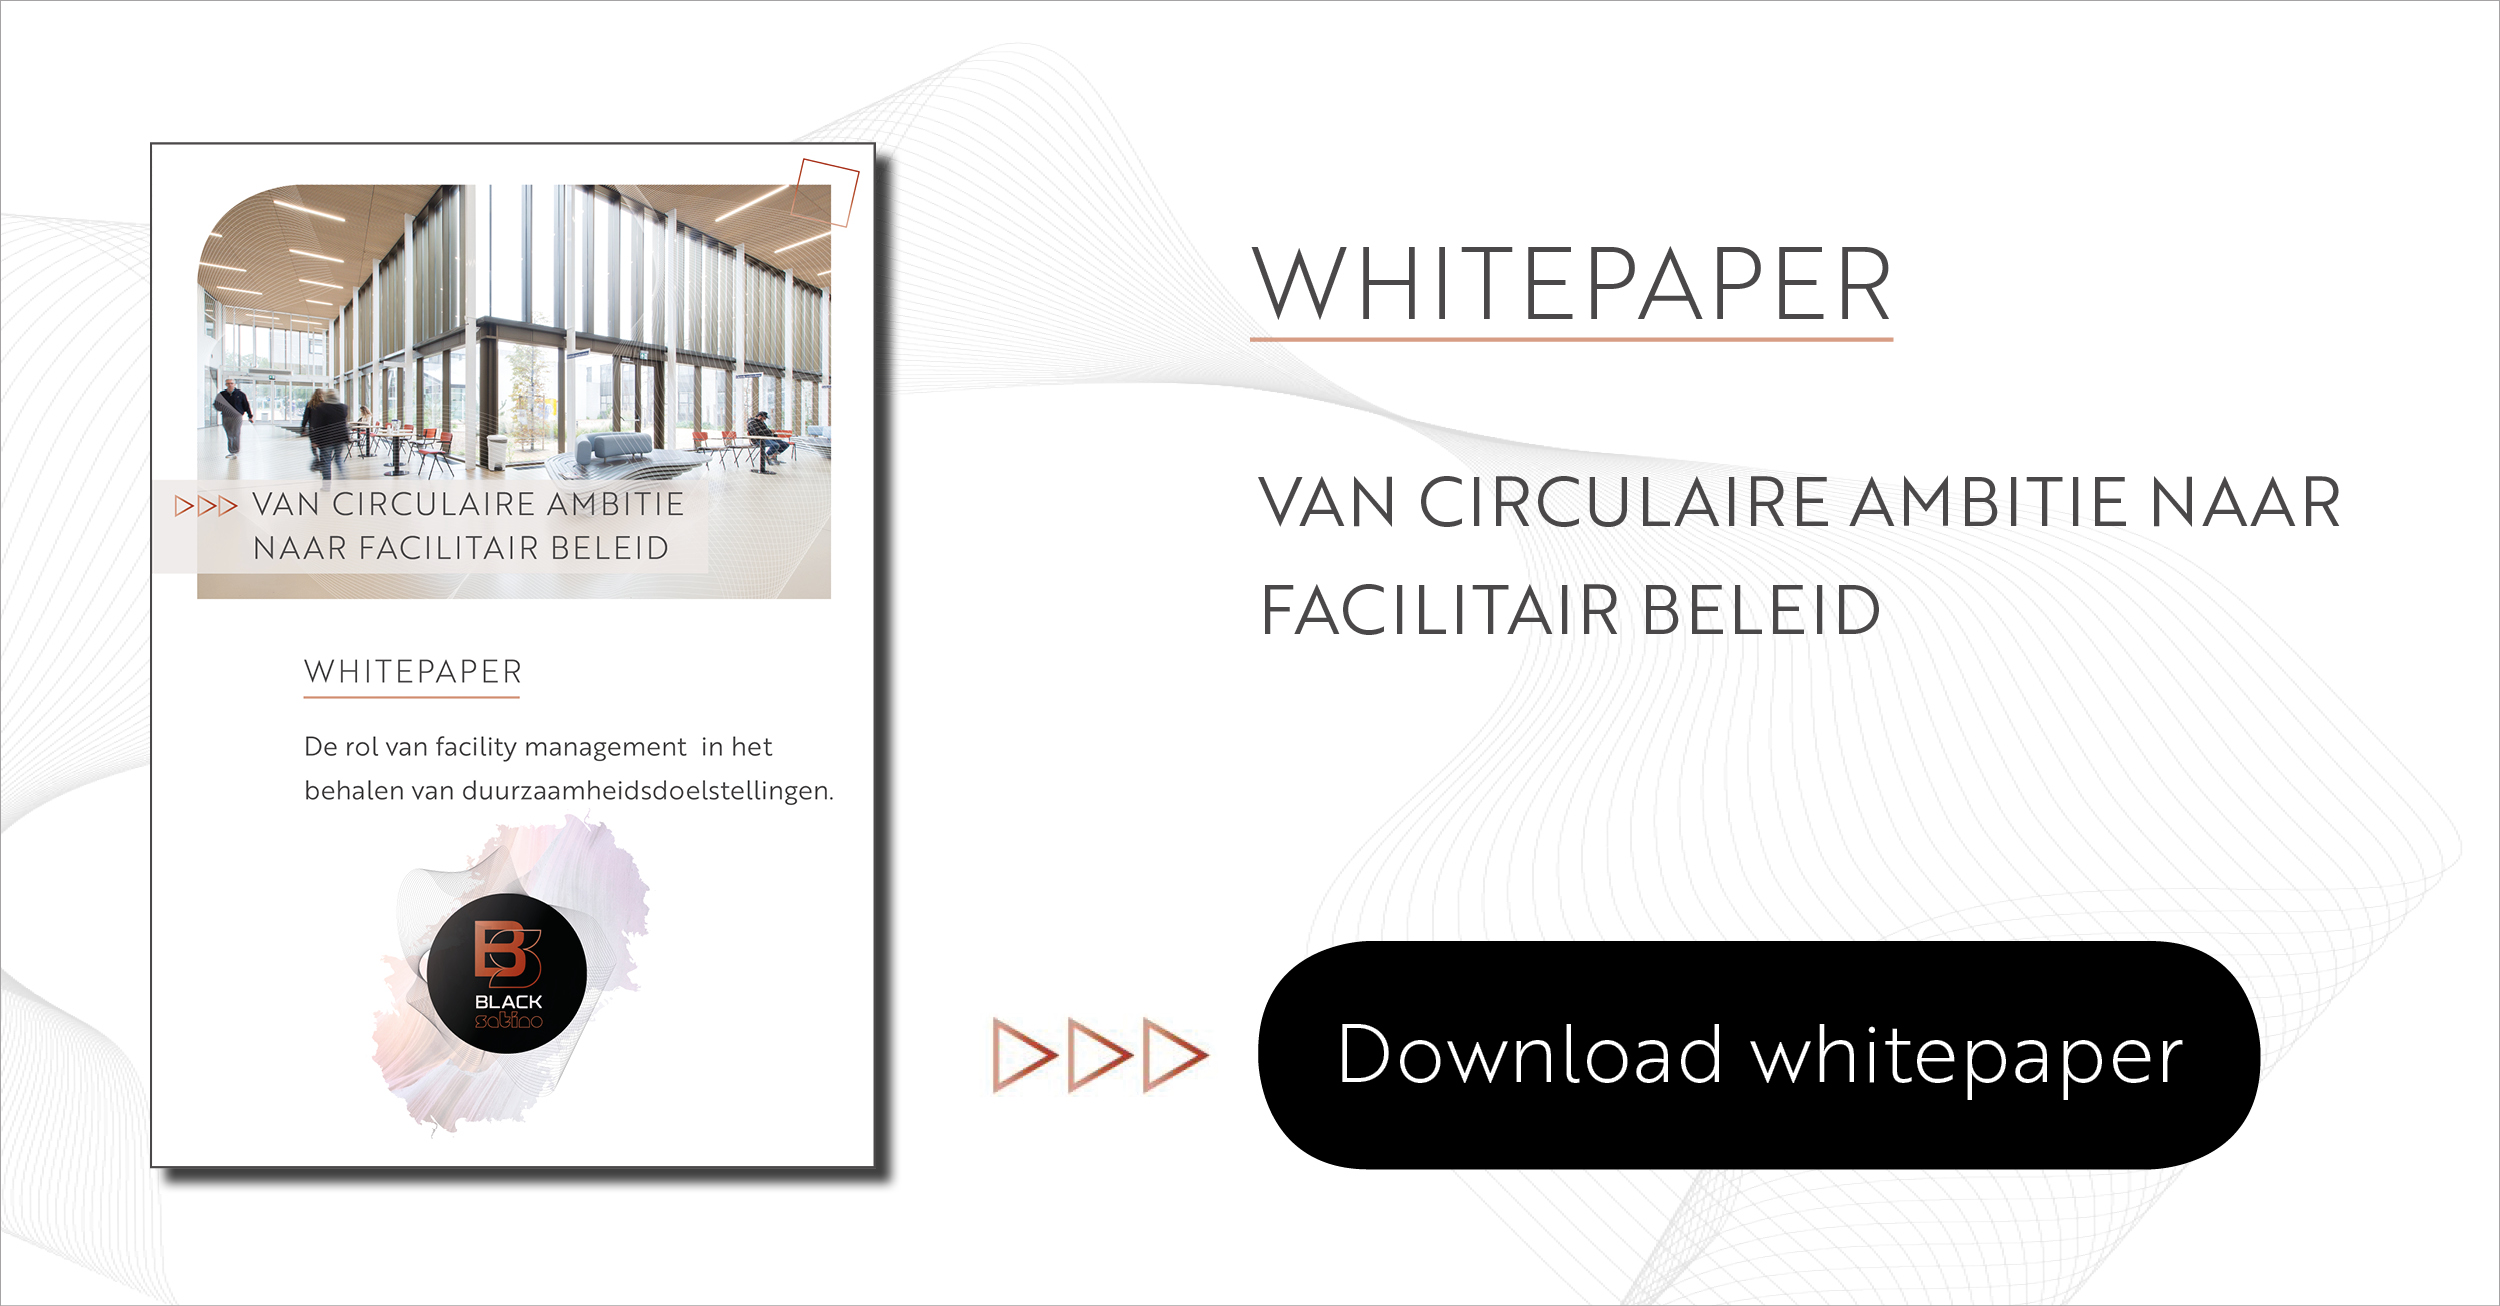 Hubspot_download whitepaper3